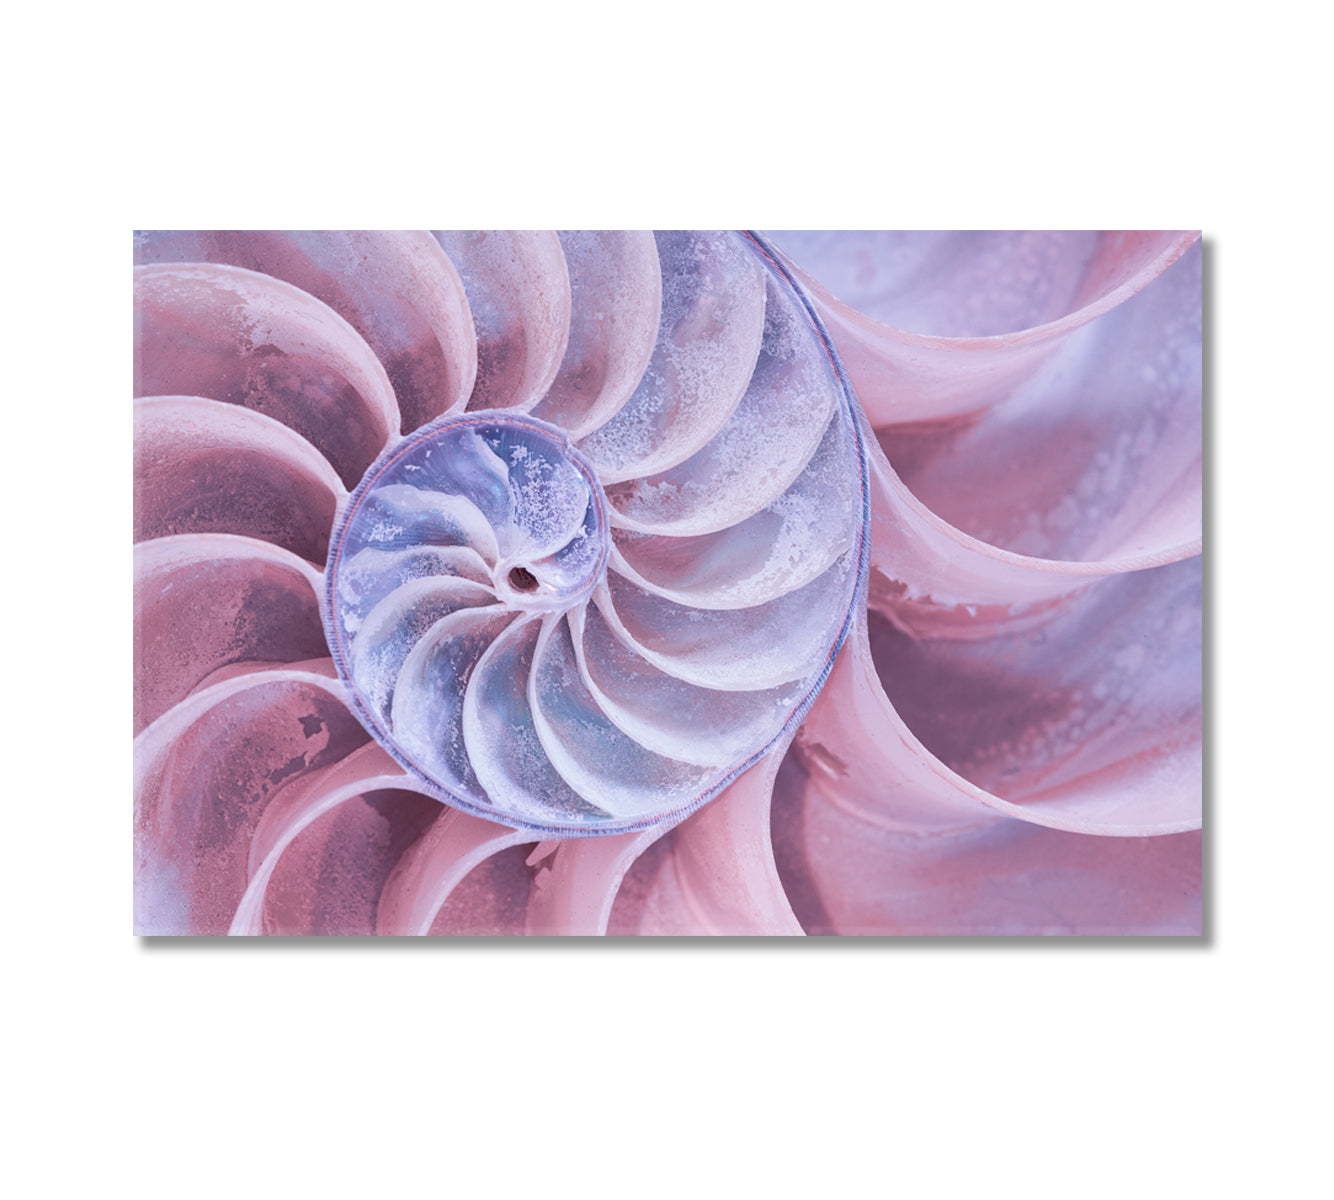 Nautilus Shell Canvas Print-Canvas Print-CetArt-1 Panel-24x16 inches-CetArt